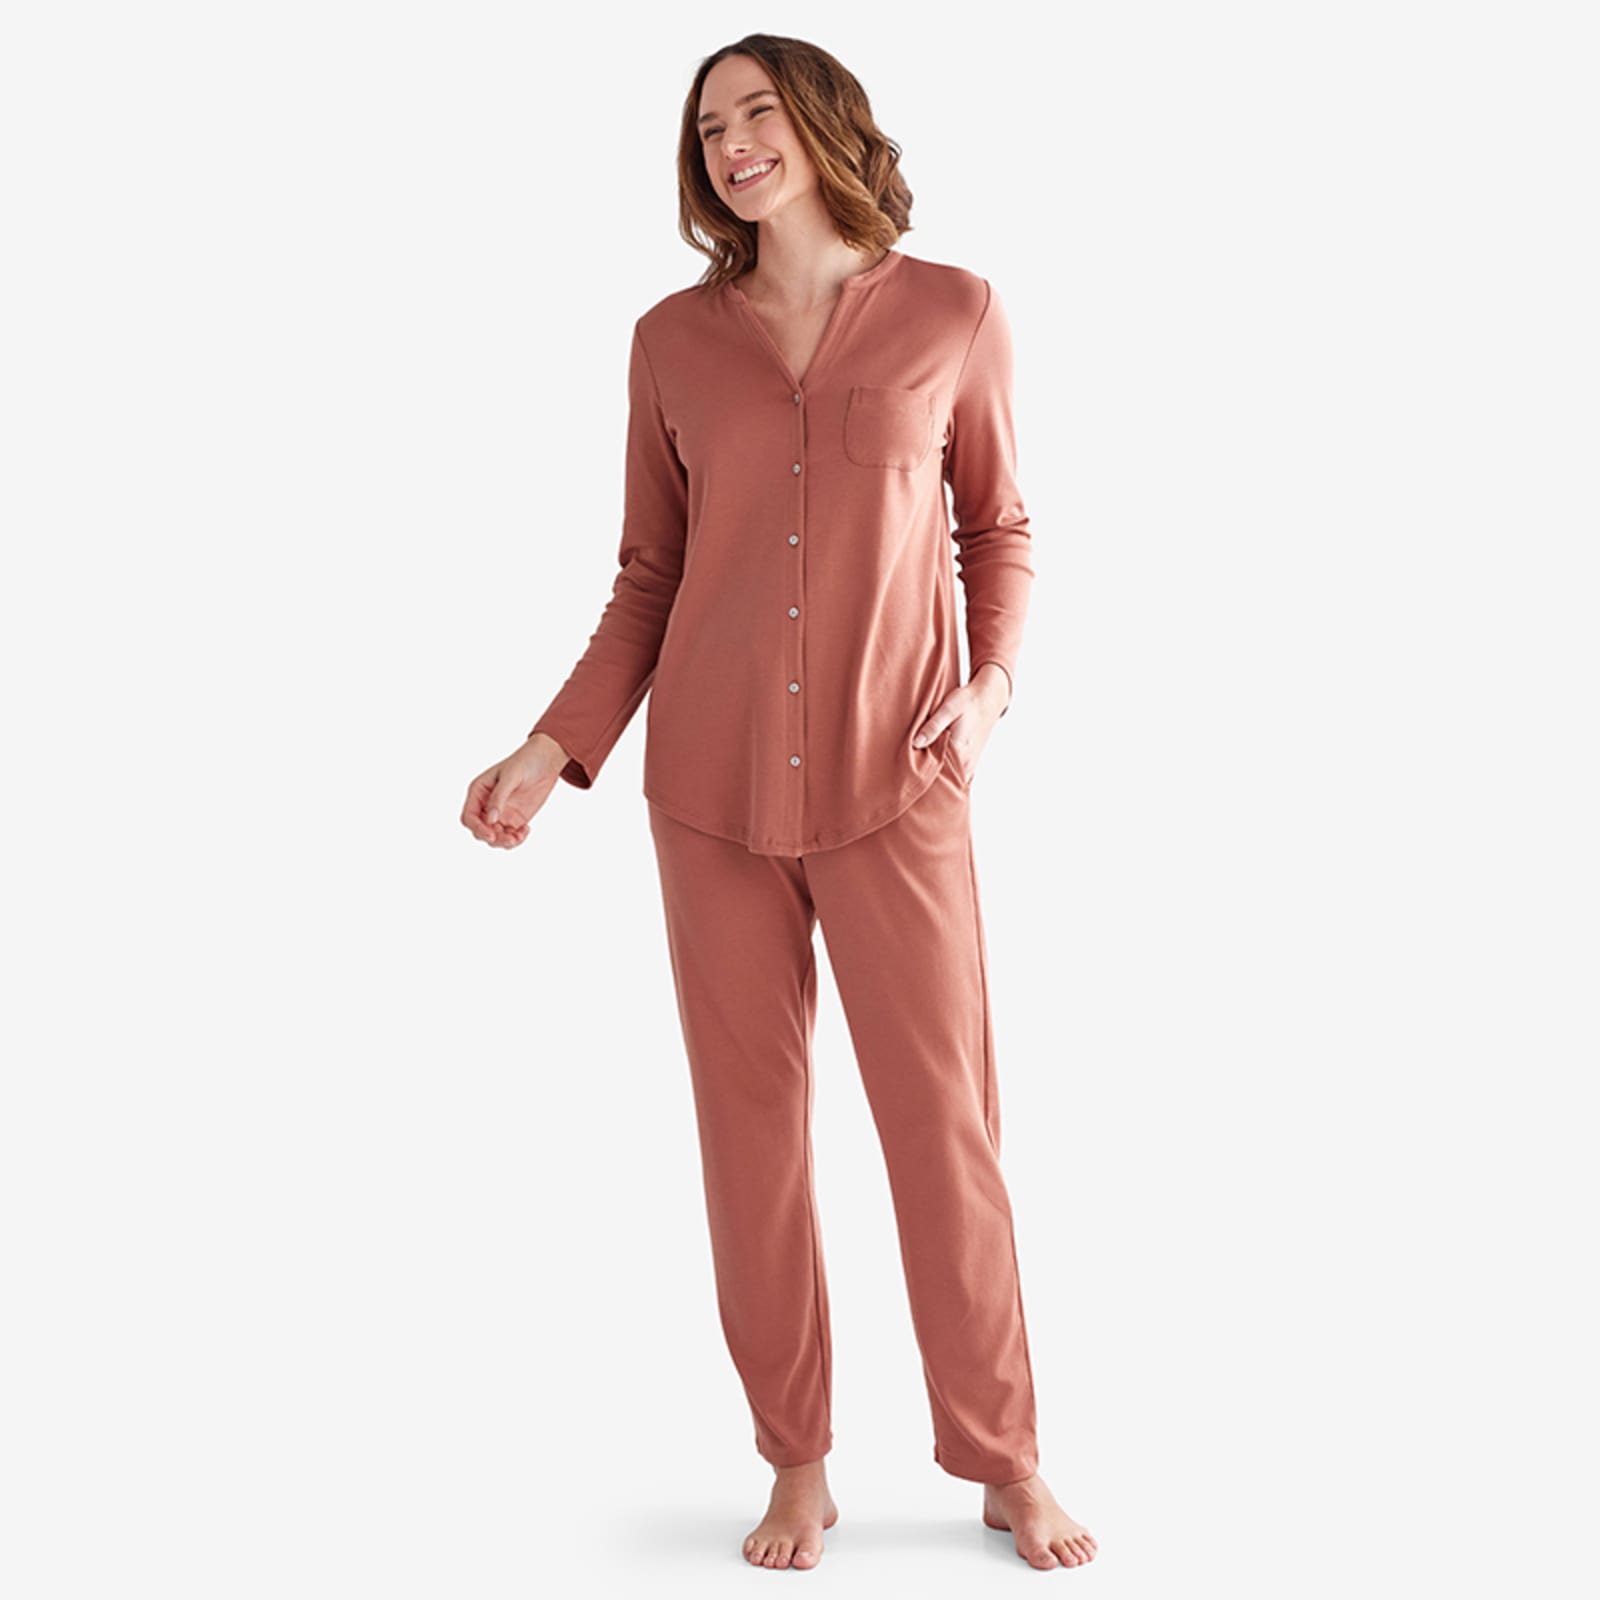 Pima Cotton Women's Pajamas, Incredibly Soft & Cozy